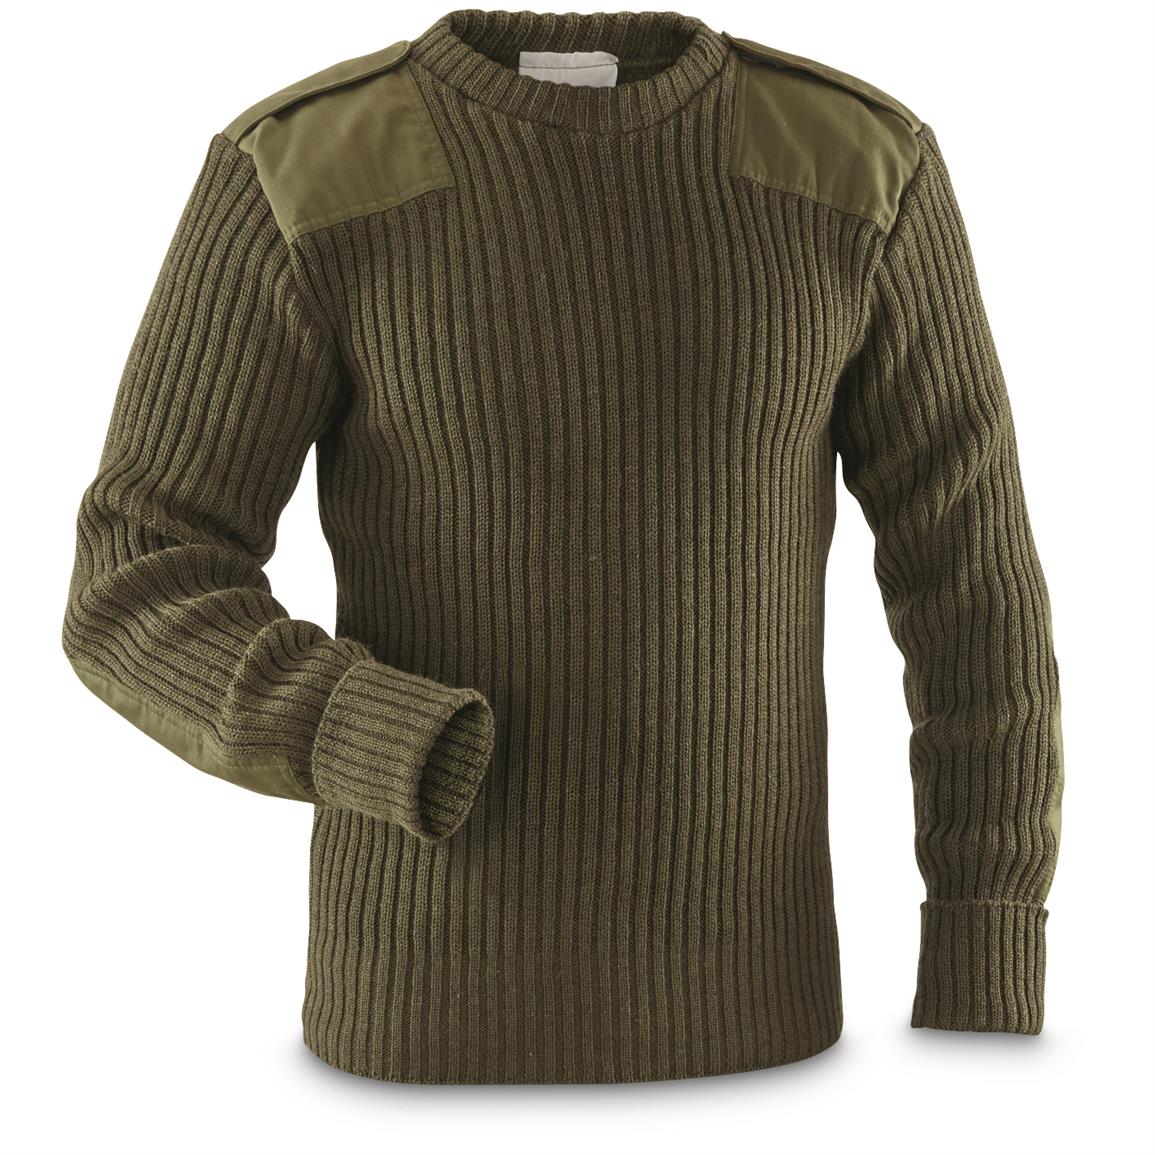 British Military Surplus Commando Wool Sweater, Olive Drab, Used